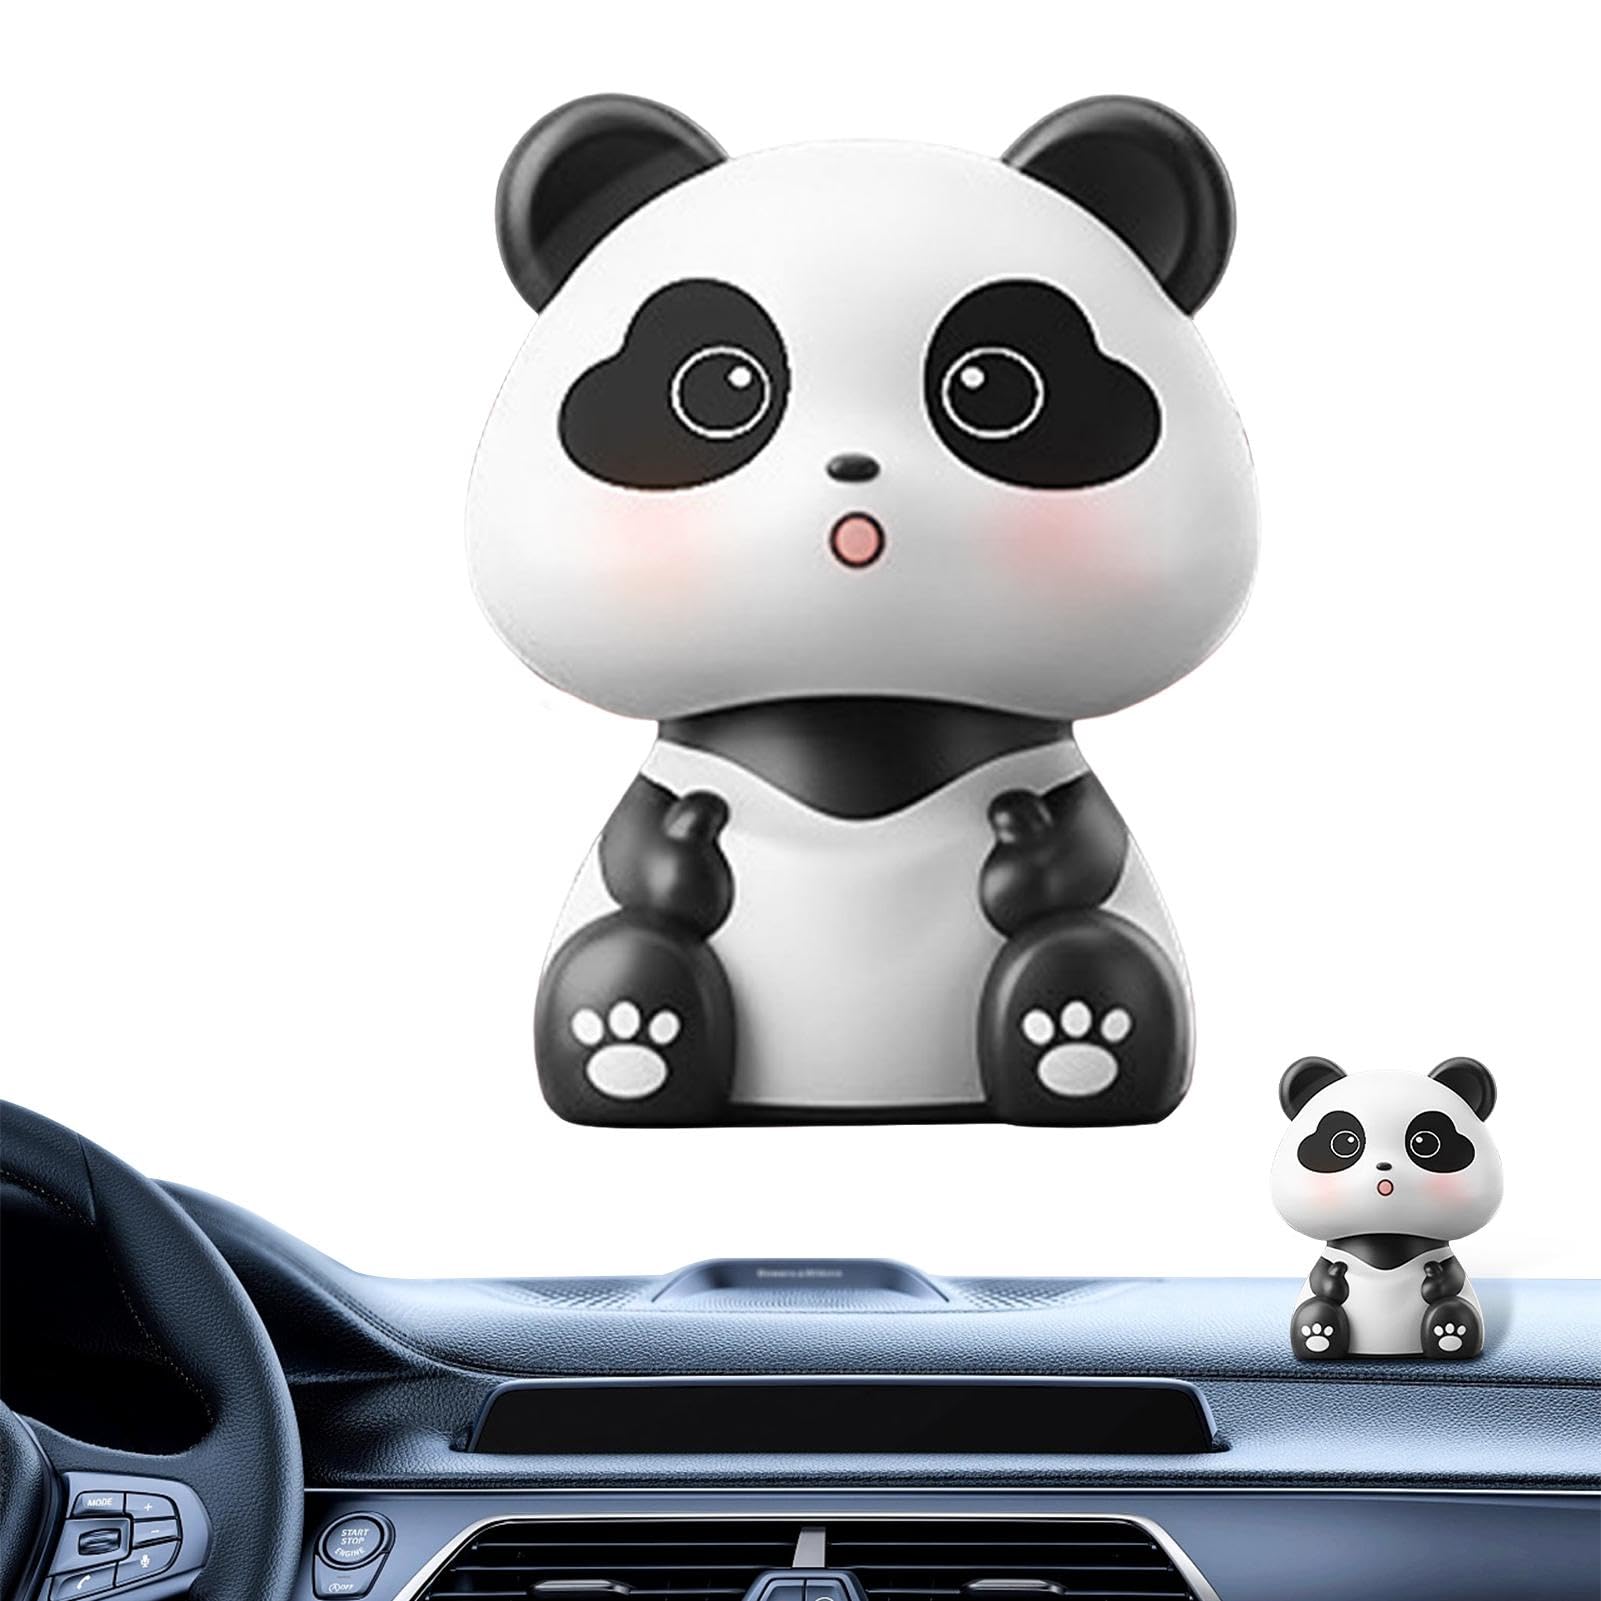 Auto-Armaturenbrett-Dekorationen Panda,Panda-Auto-Armaturenbrett-Dekor | Panda-Armaturenbrett-Figuren - Schöner Panda-Auto-Armaturenbrett-Dekor, solarbetriebener schüttelnder Kopf-Panda für den Deskto von Toliya